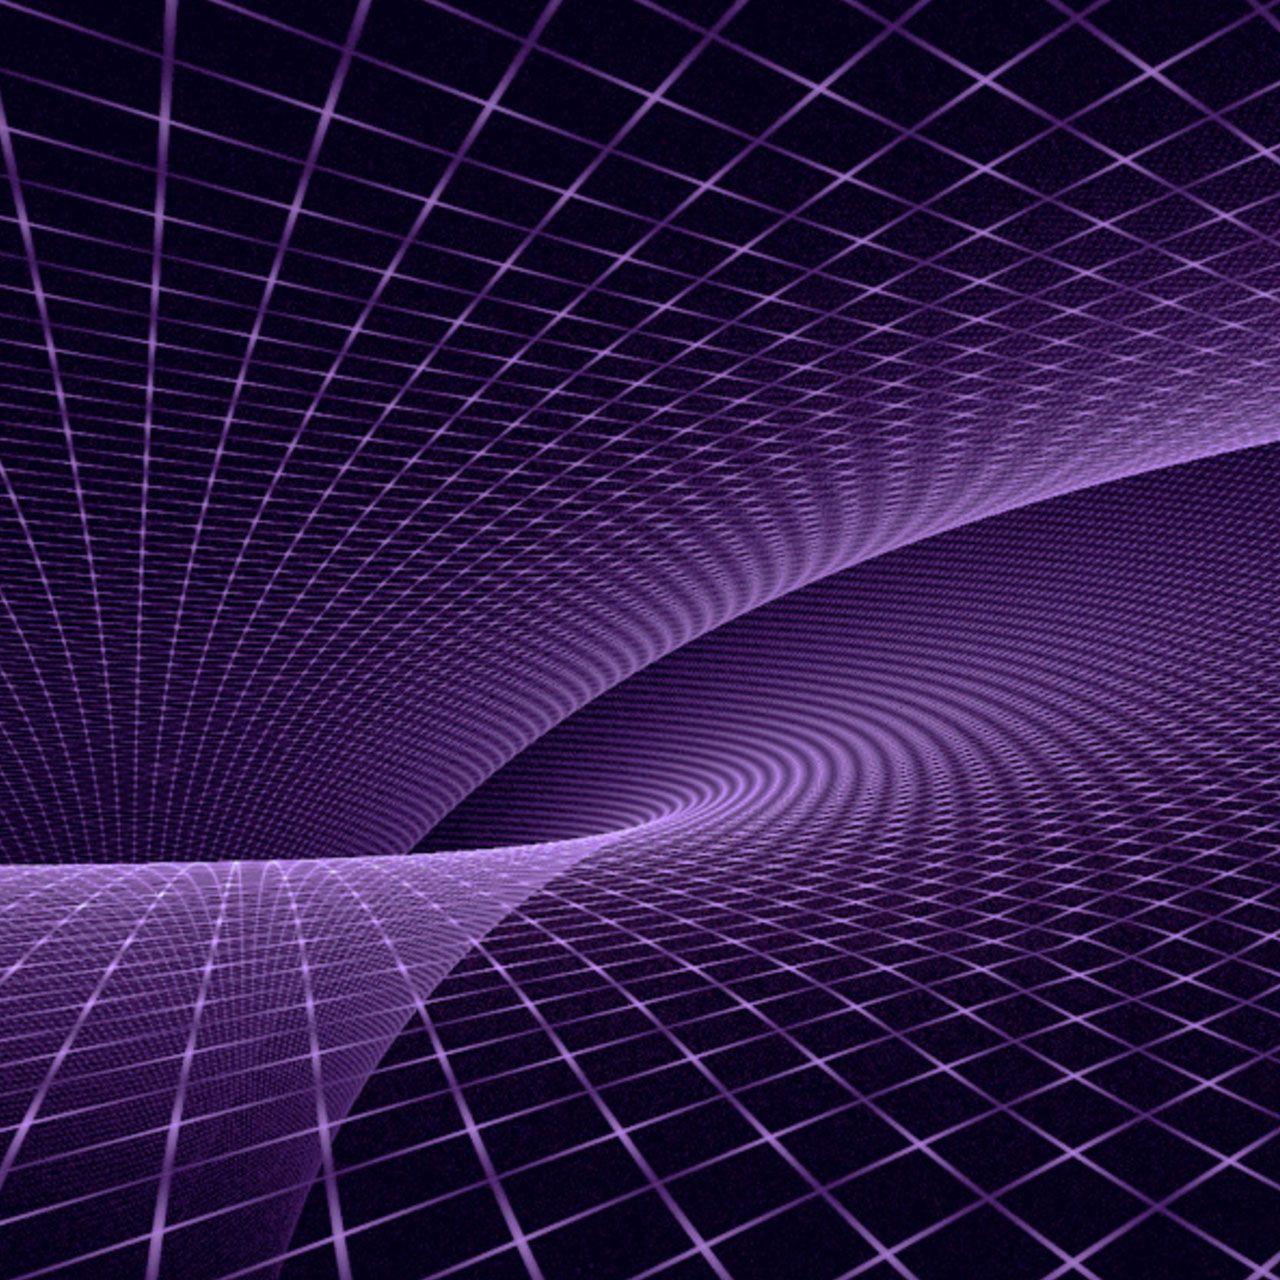 Purple Fractal Samsung Galaxy Tab wallpapers